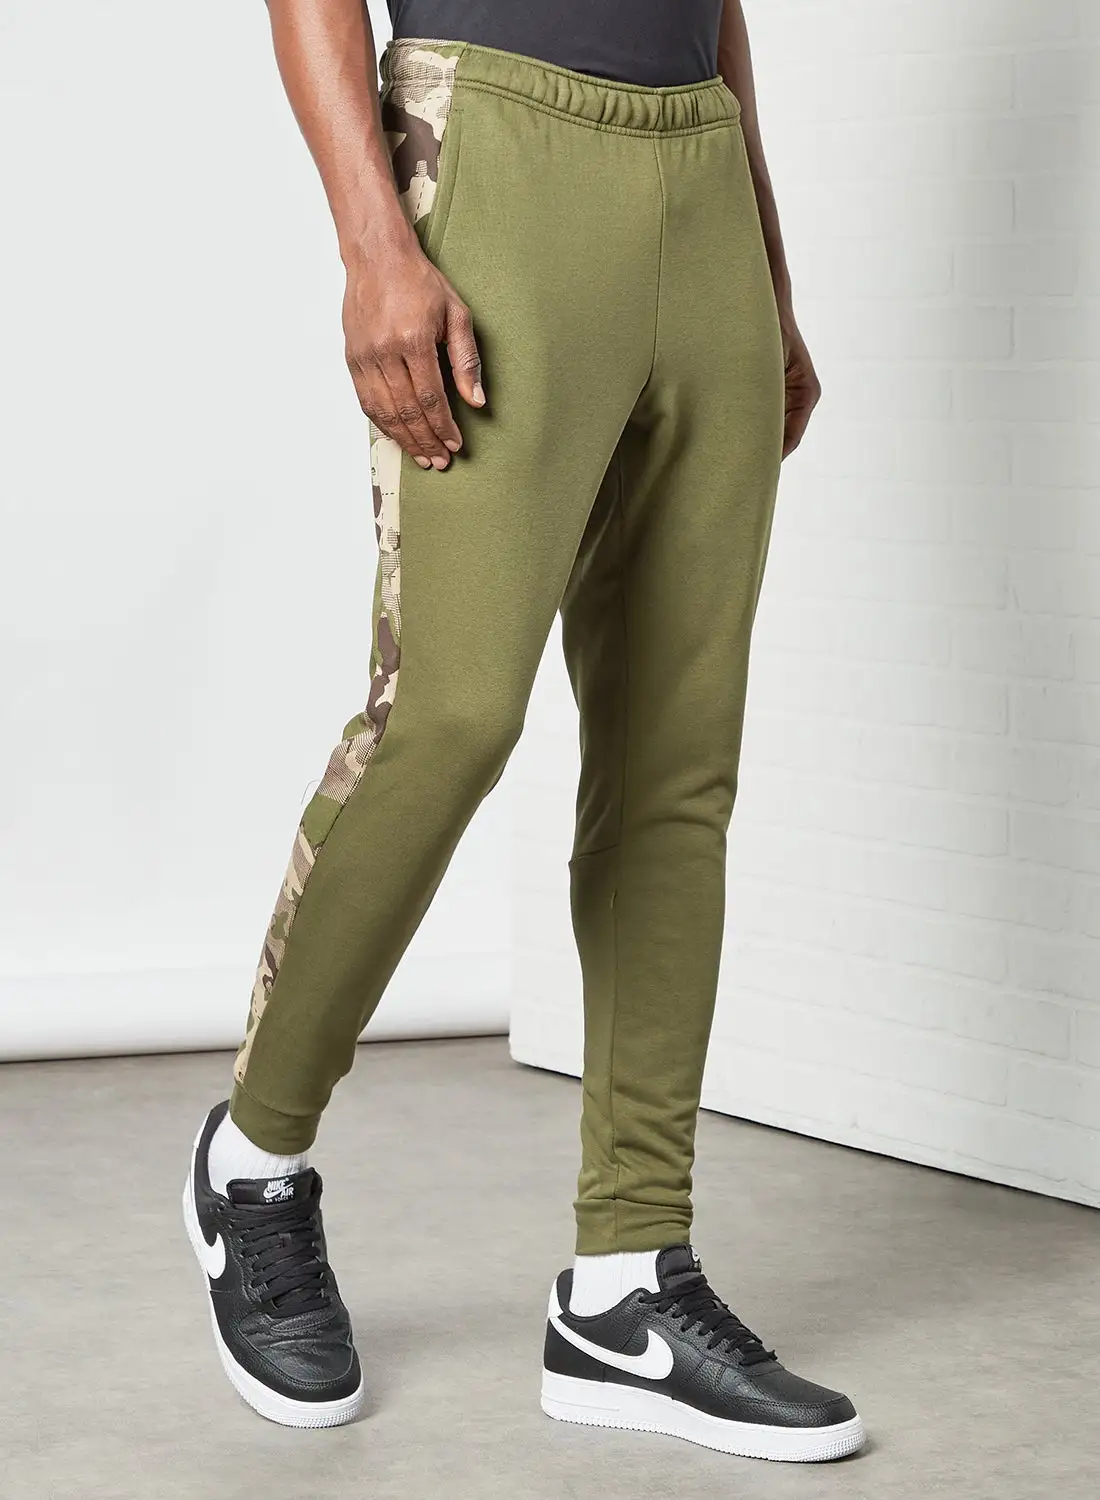 Nike Dri-FIT Tapered Camo Training Pants Olive